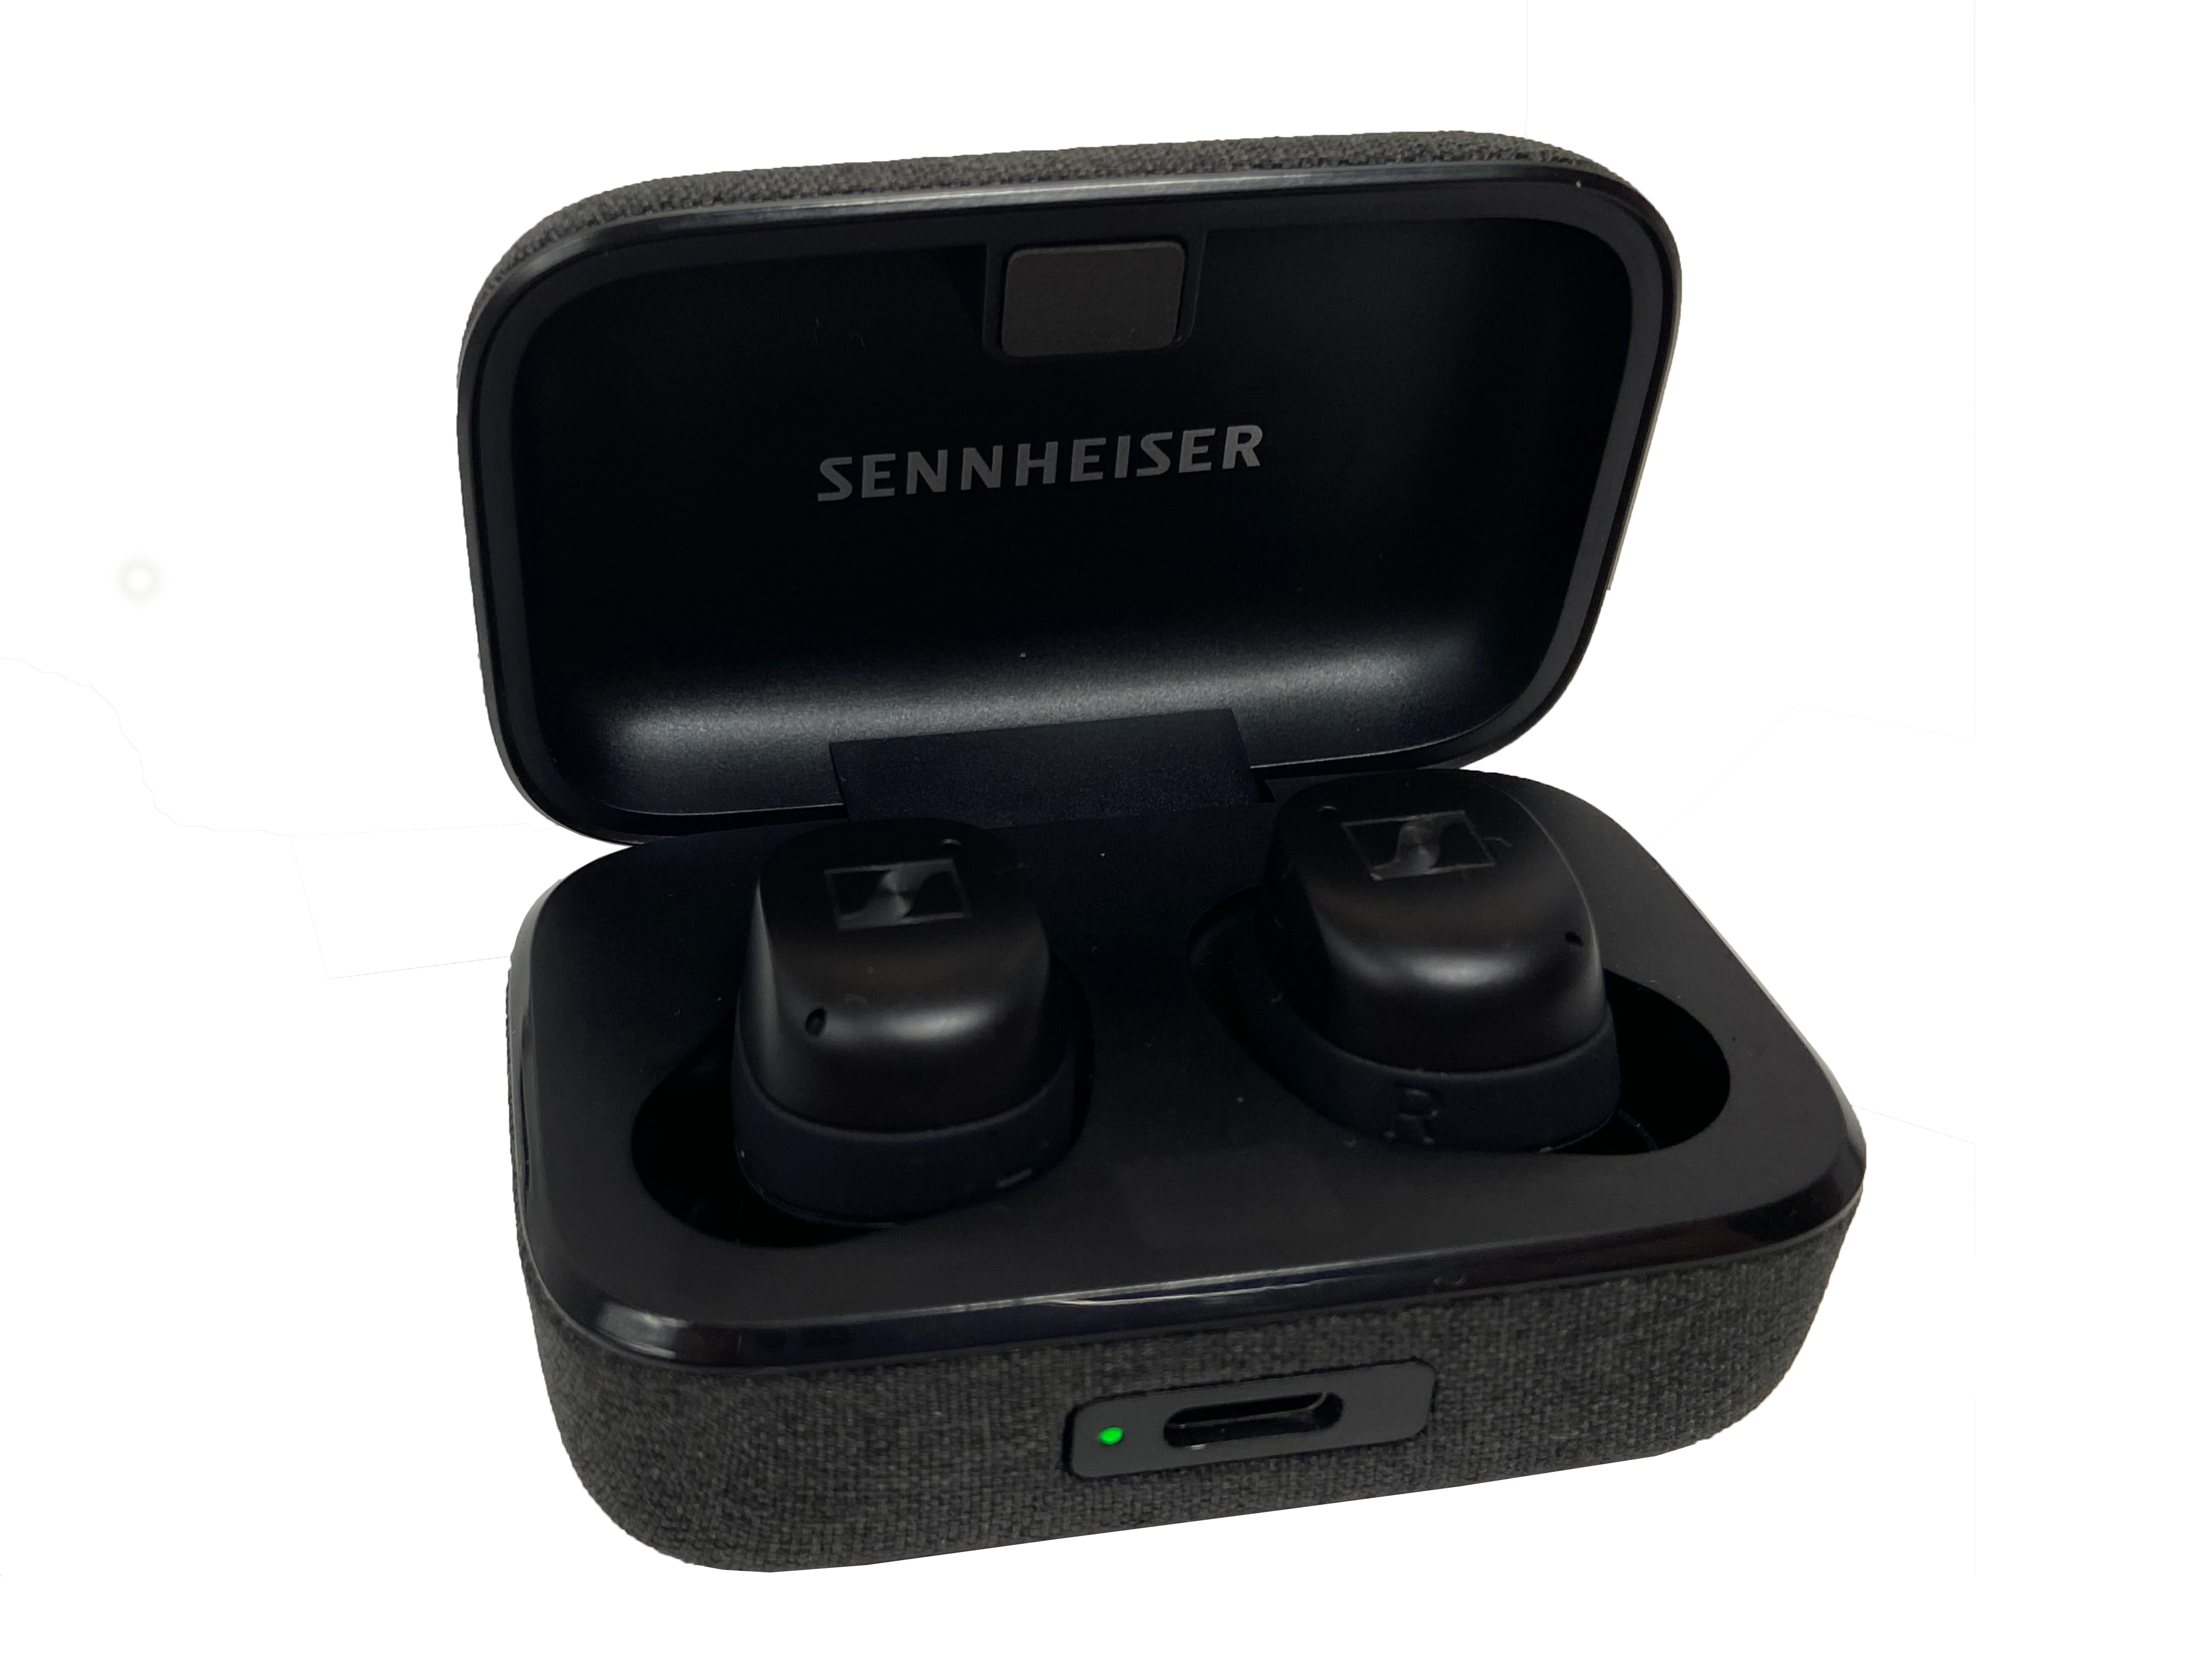 Sennheiser Momentum 3 True Wireless - Review